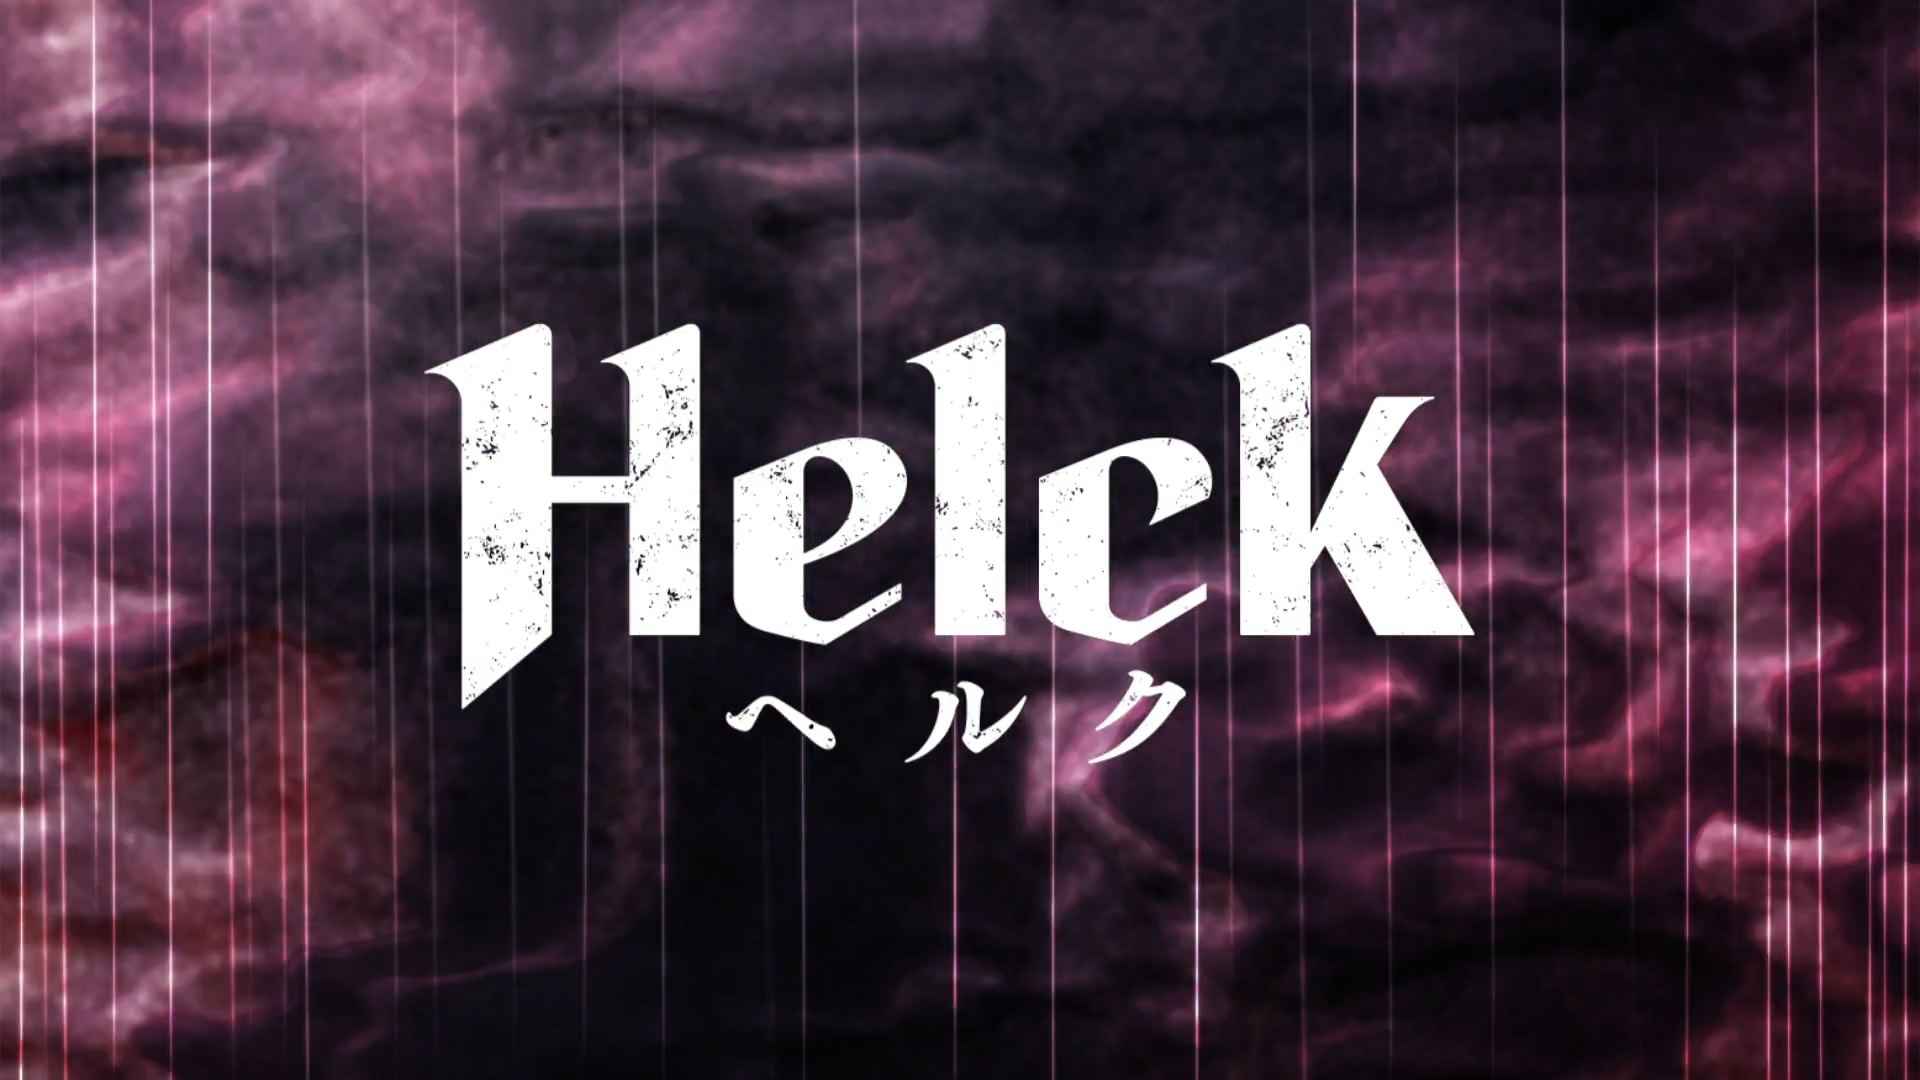 Helck  Хелк - 06  Bg Mtl Sub  - Vbox7